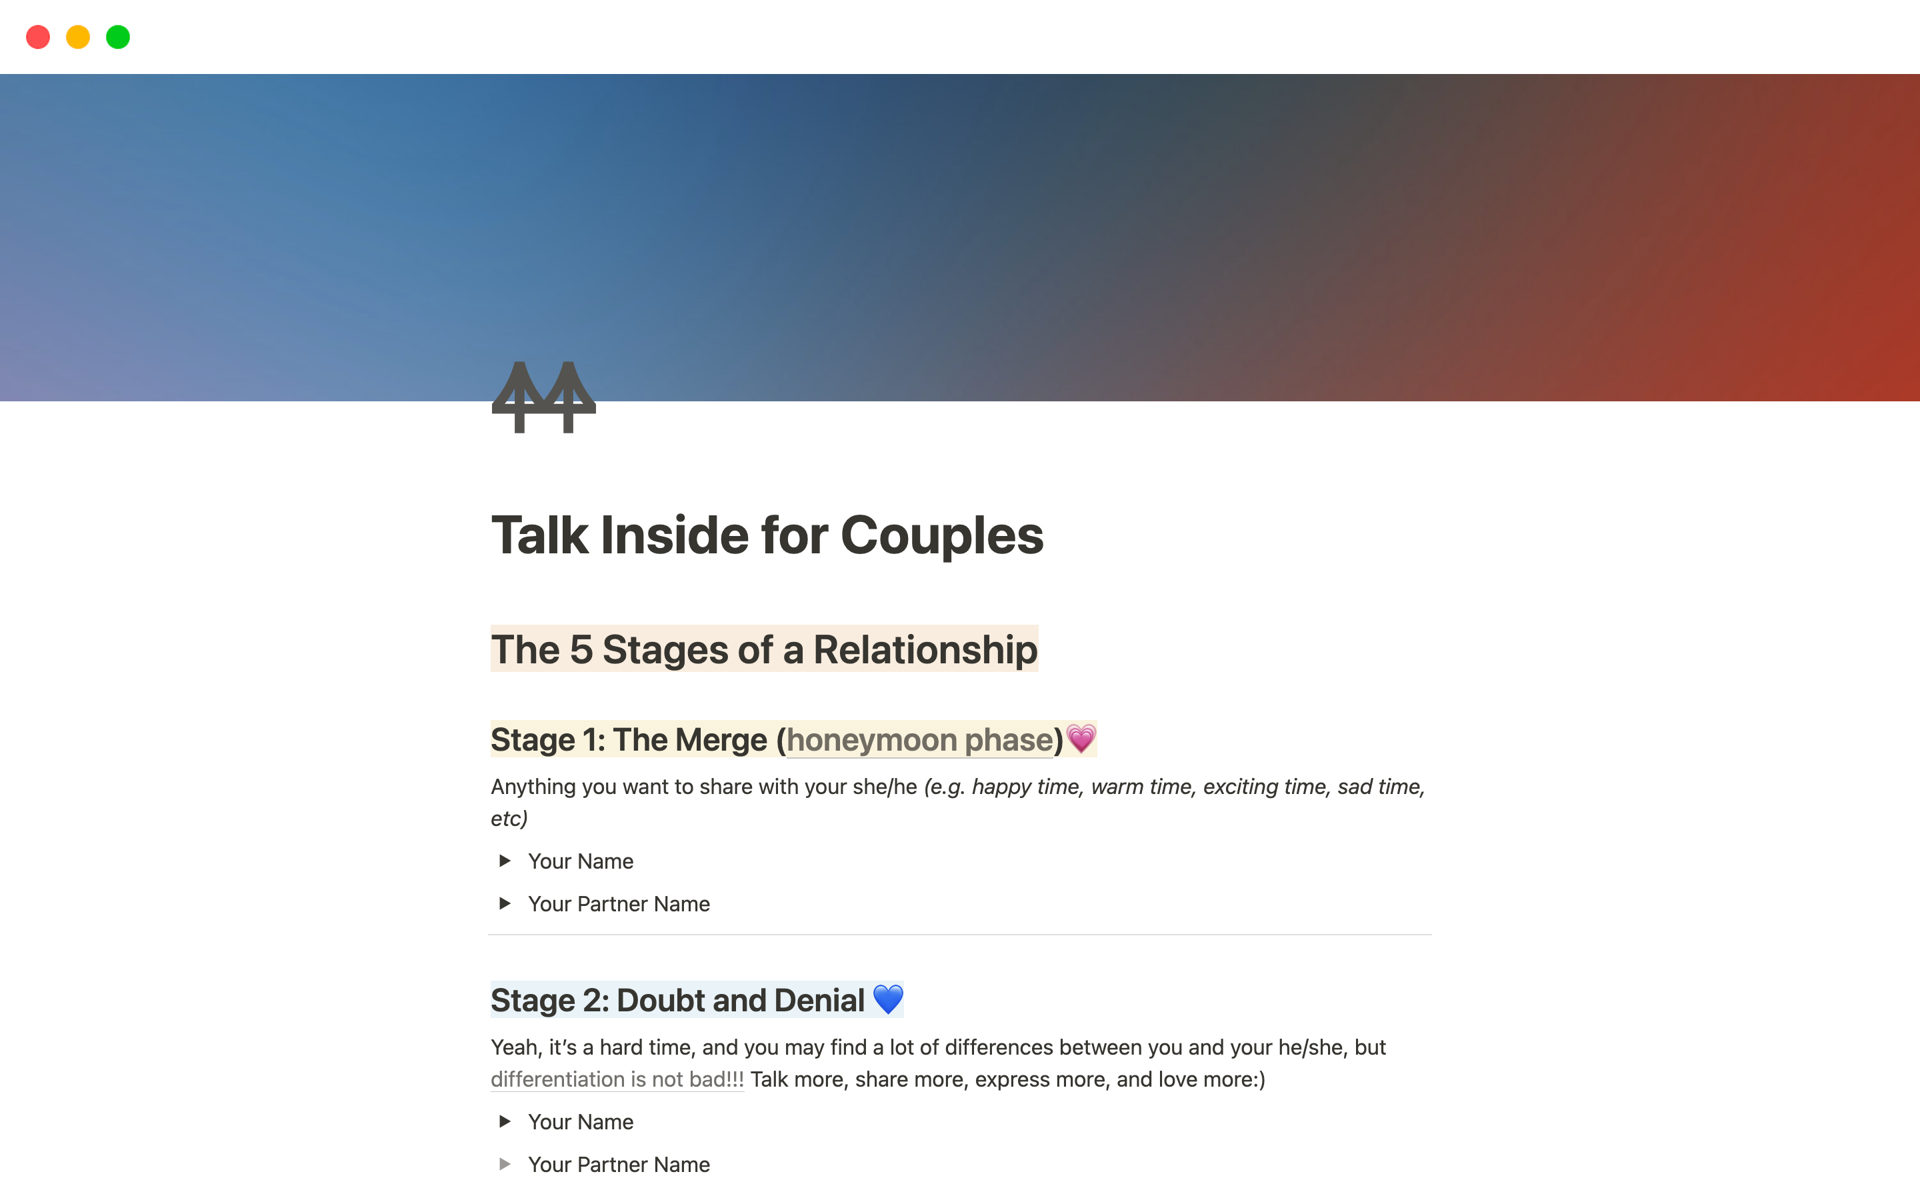 Vista previa de plantilla para Talk Inside for Couples